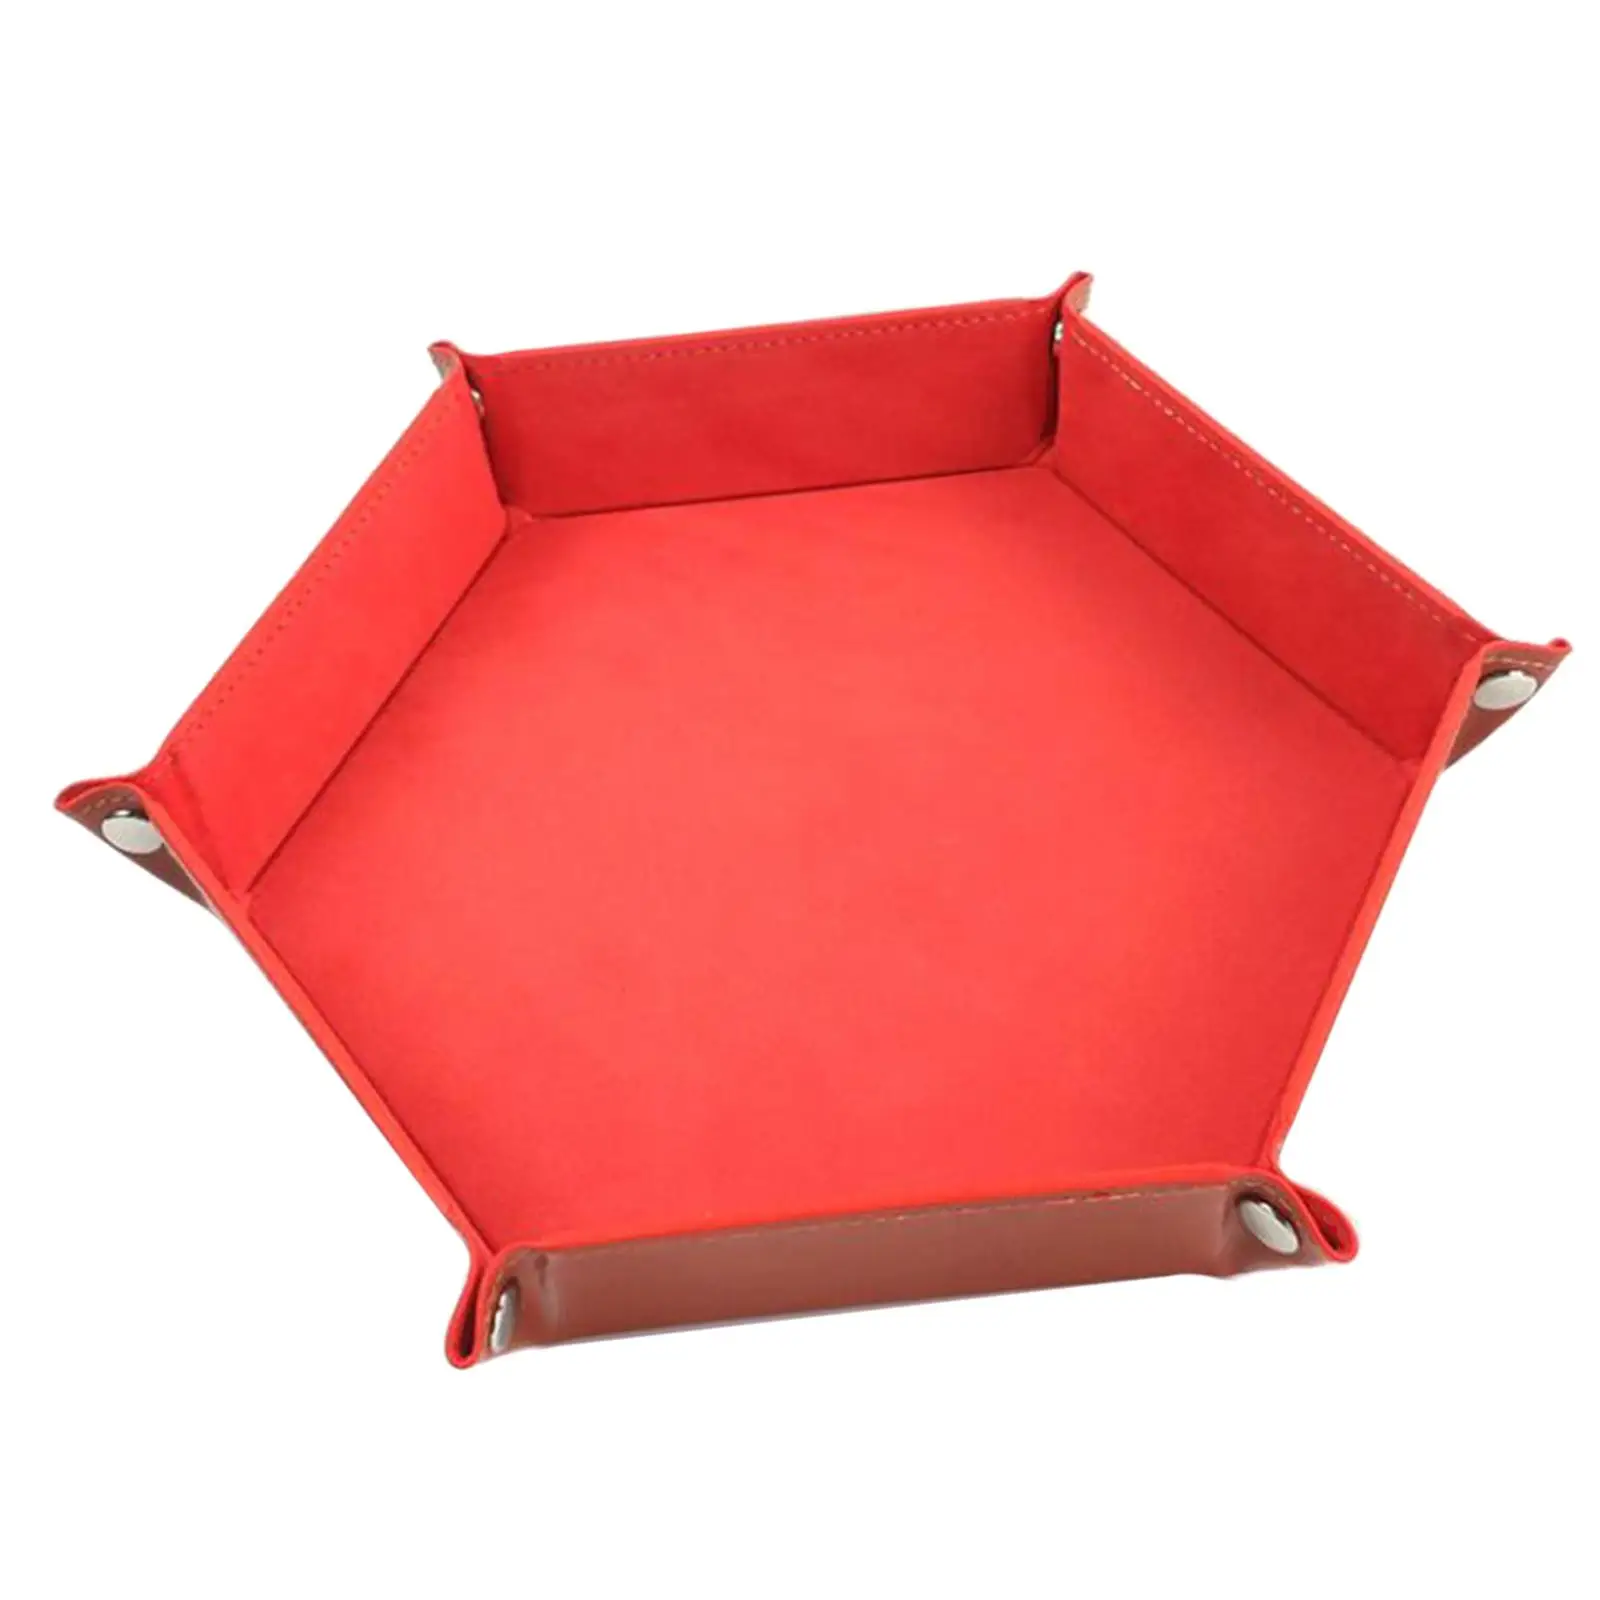 Hexagonal Dice Tray Box Folding for Board Games  Jewelry